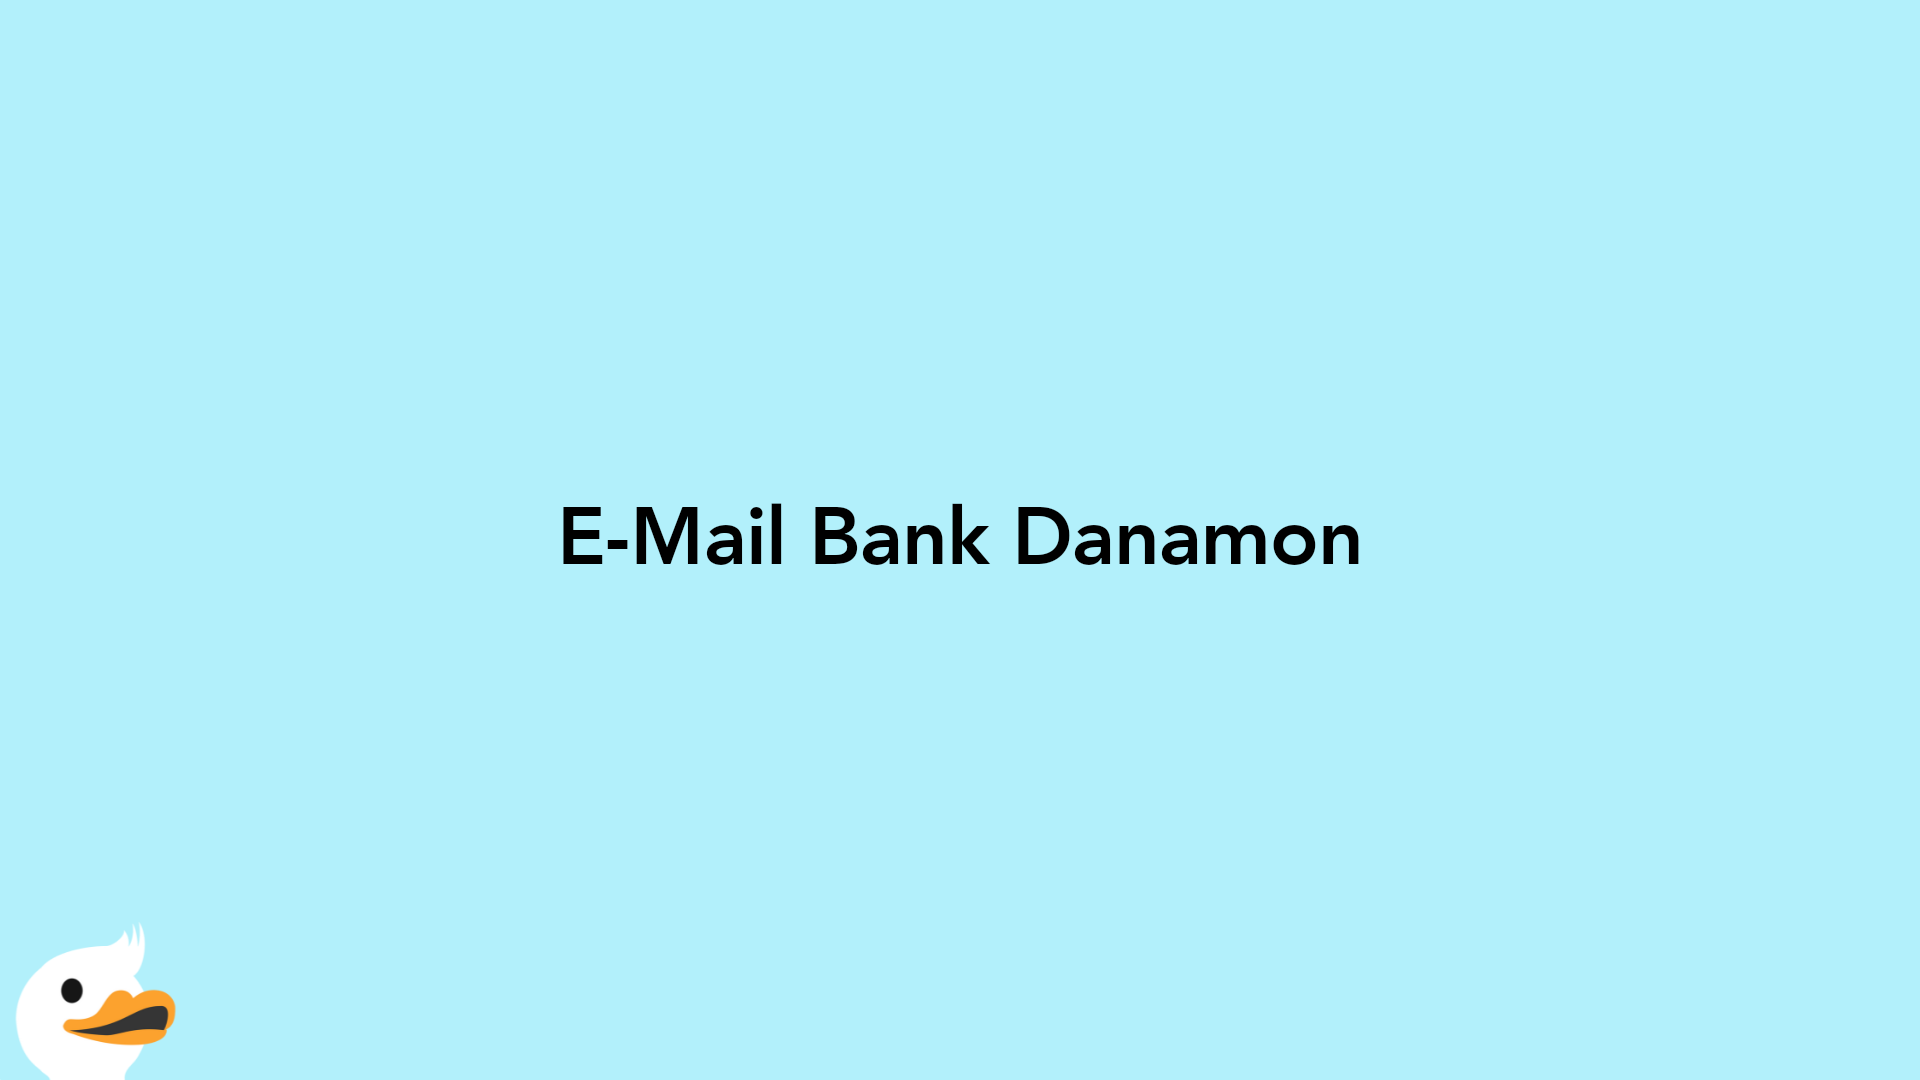 E-Mail Bank Danamon